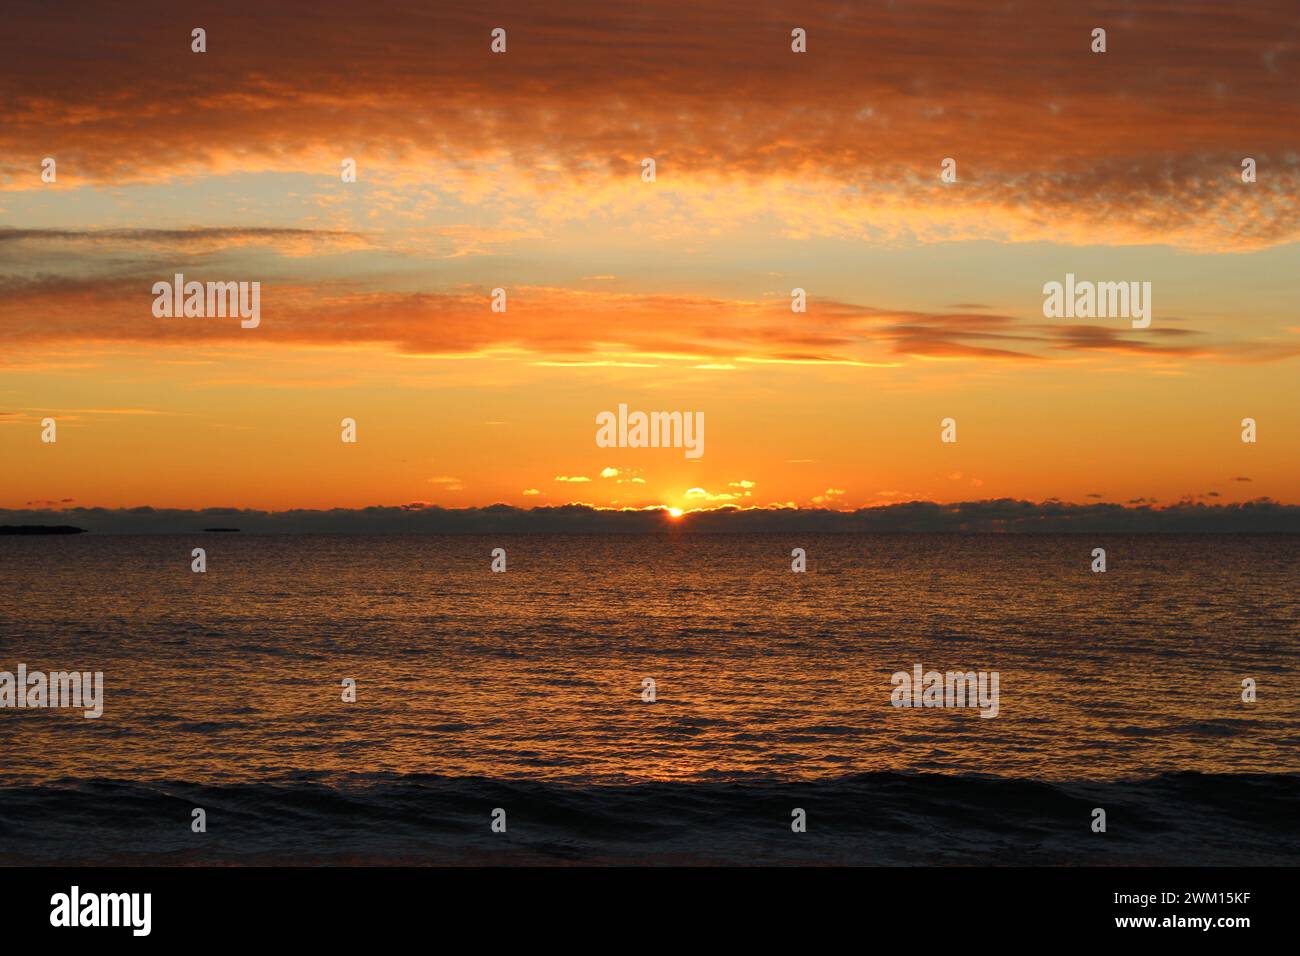 Sunrise view with orange sky Stock Photo